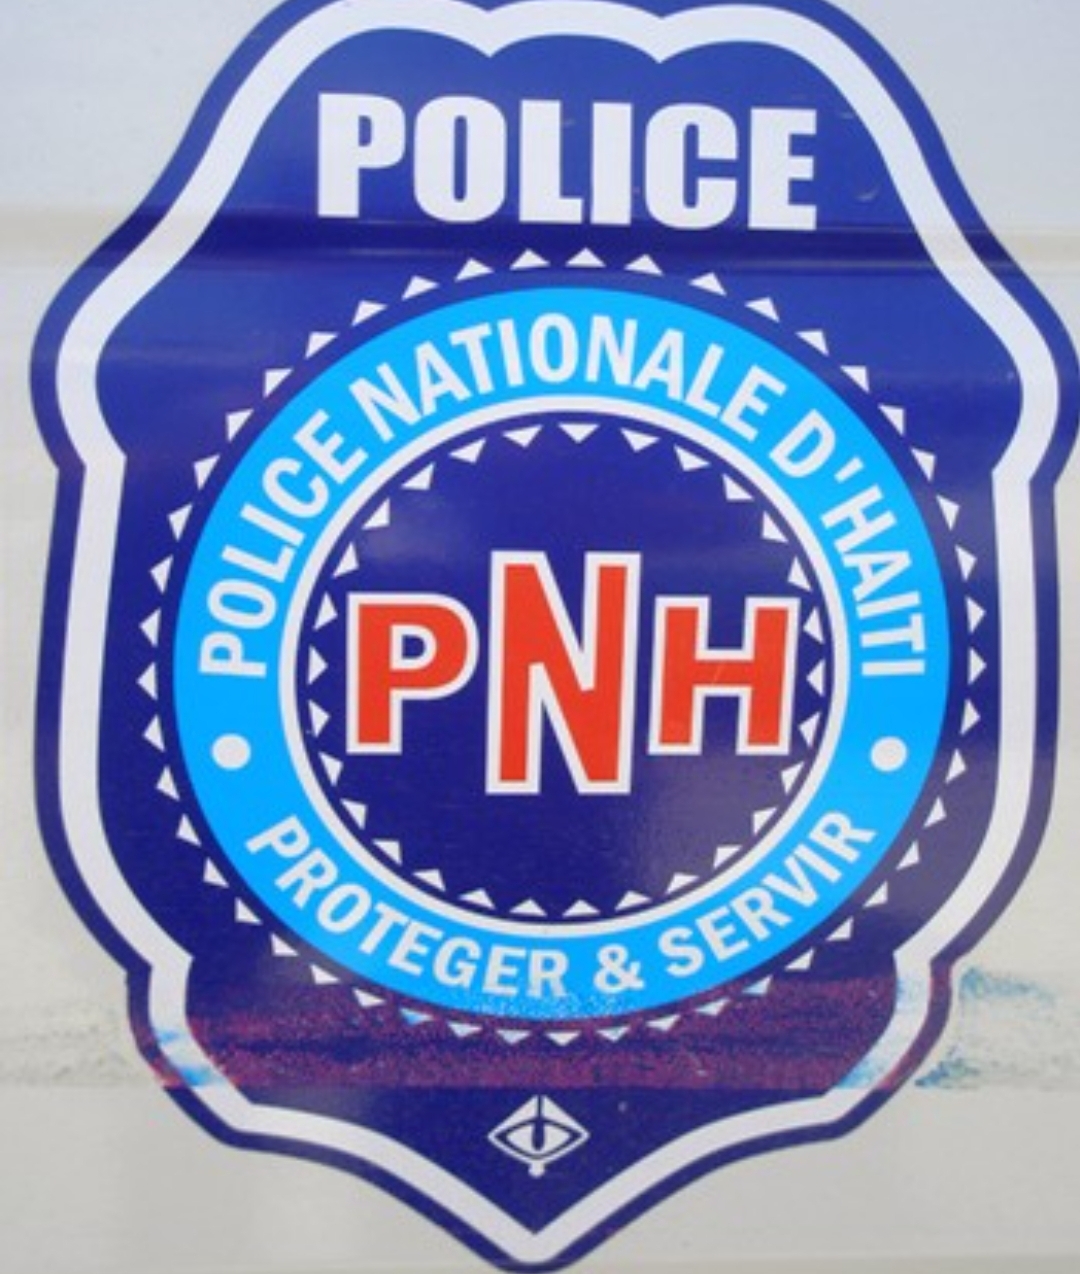 Police Nationale D'Haiti 